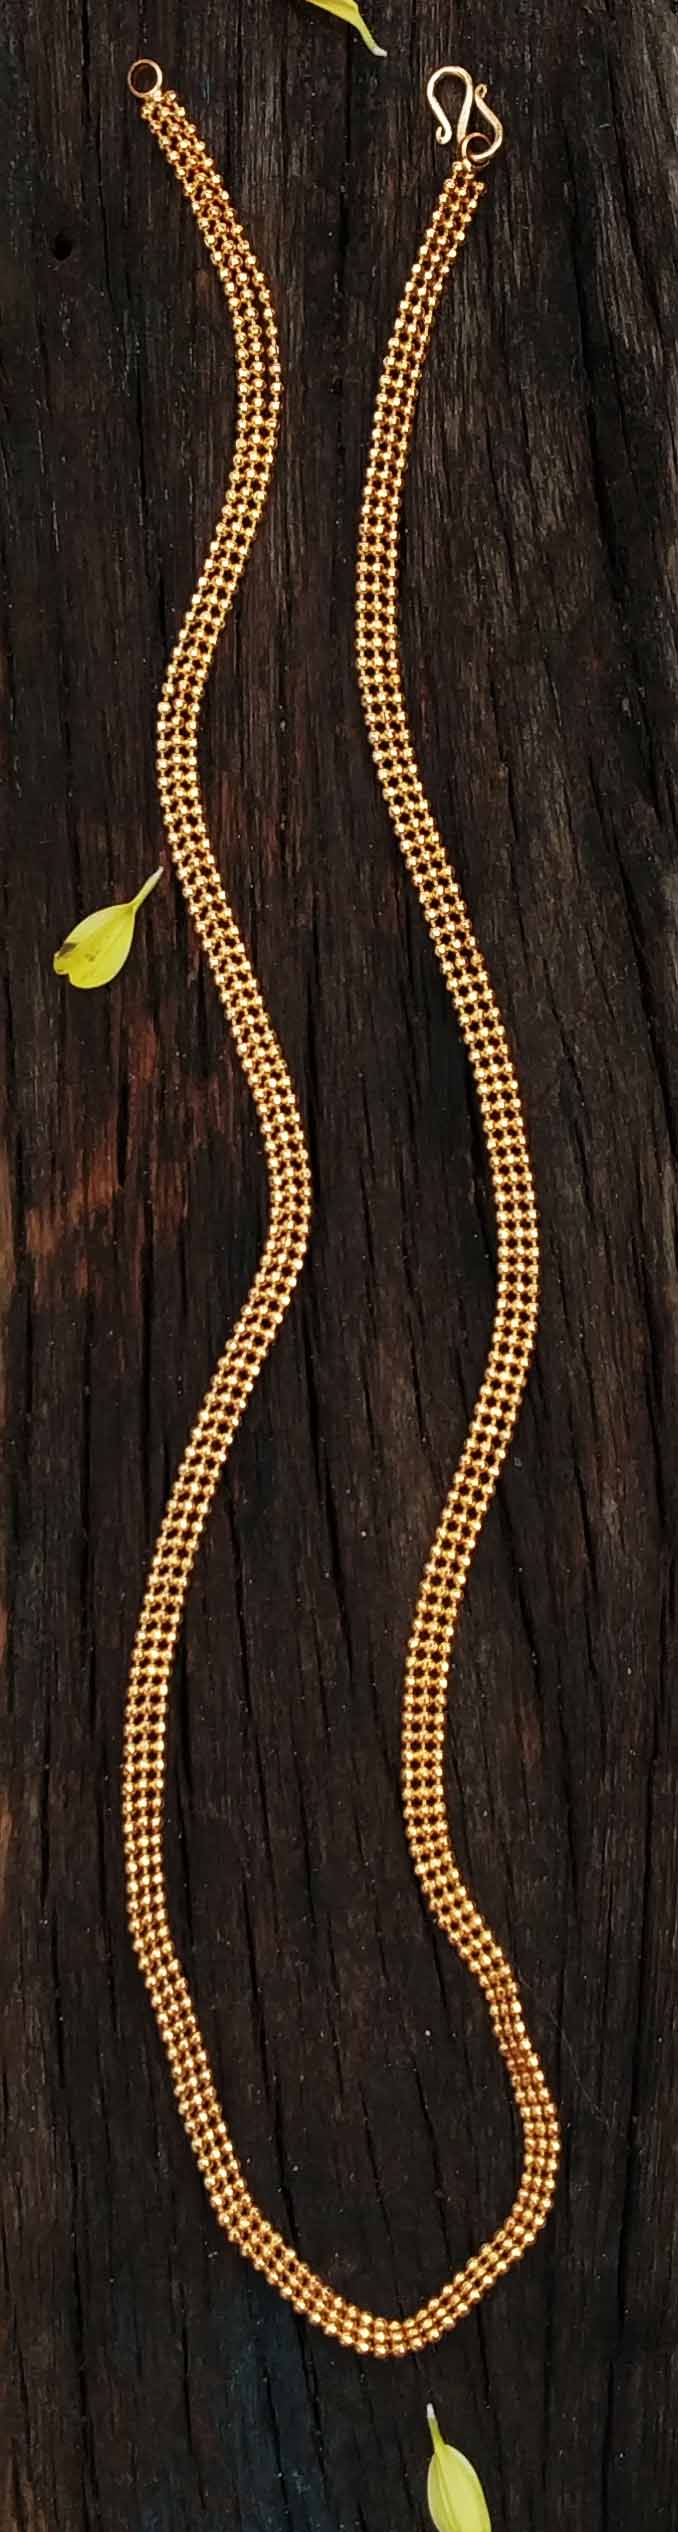 long chain necklace design